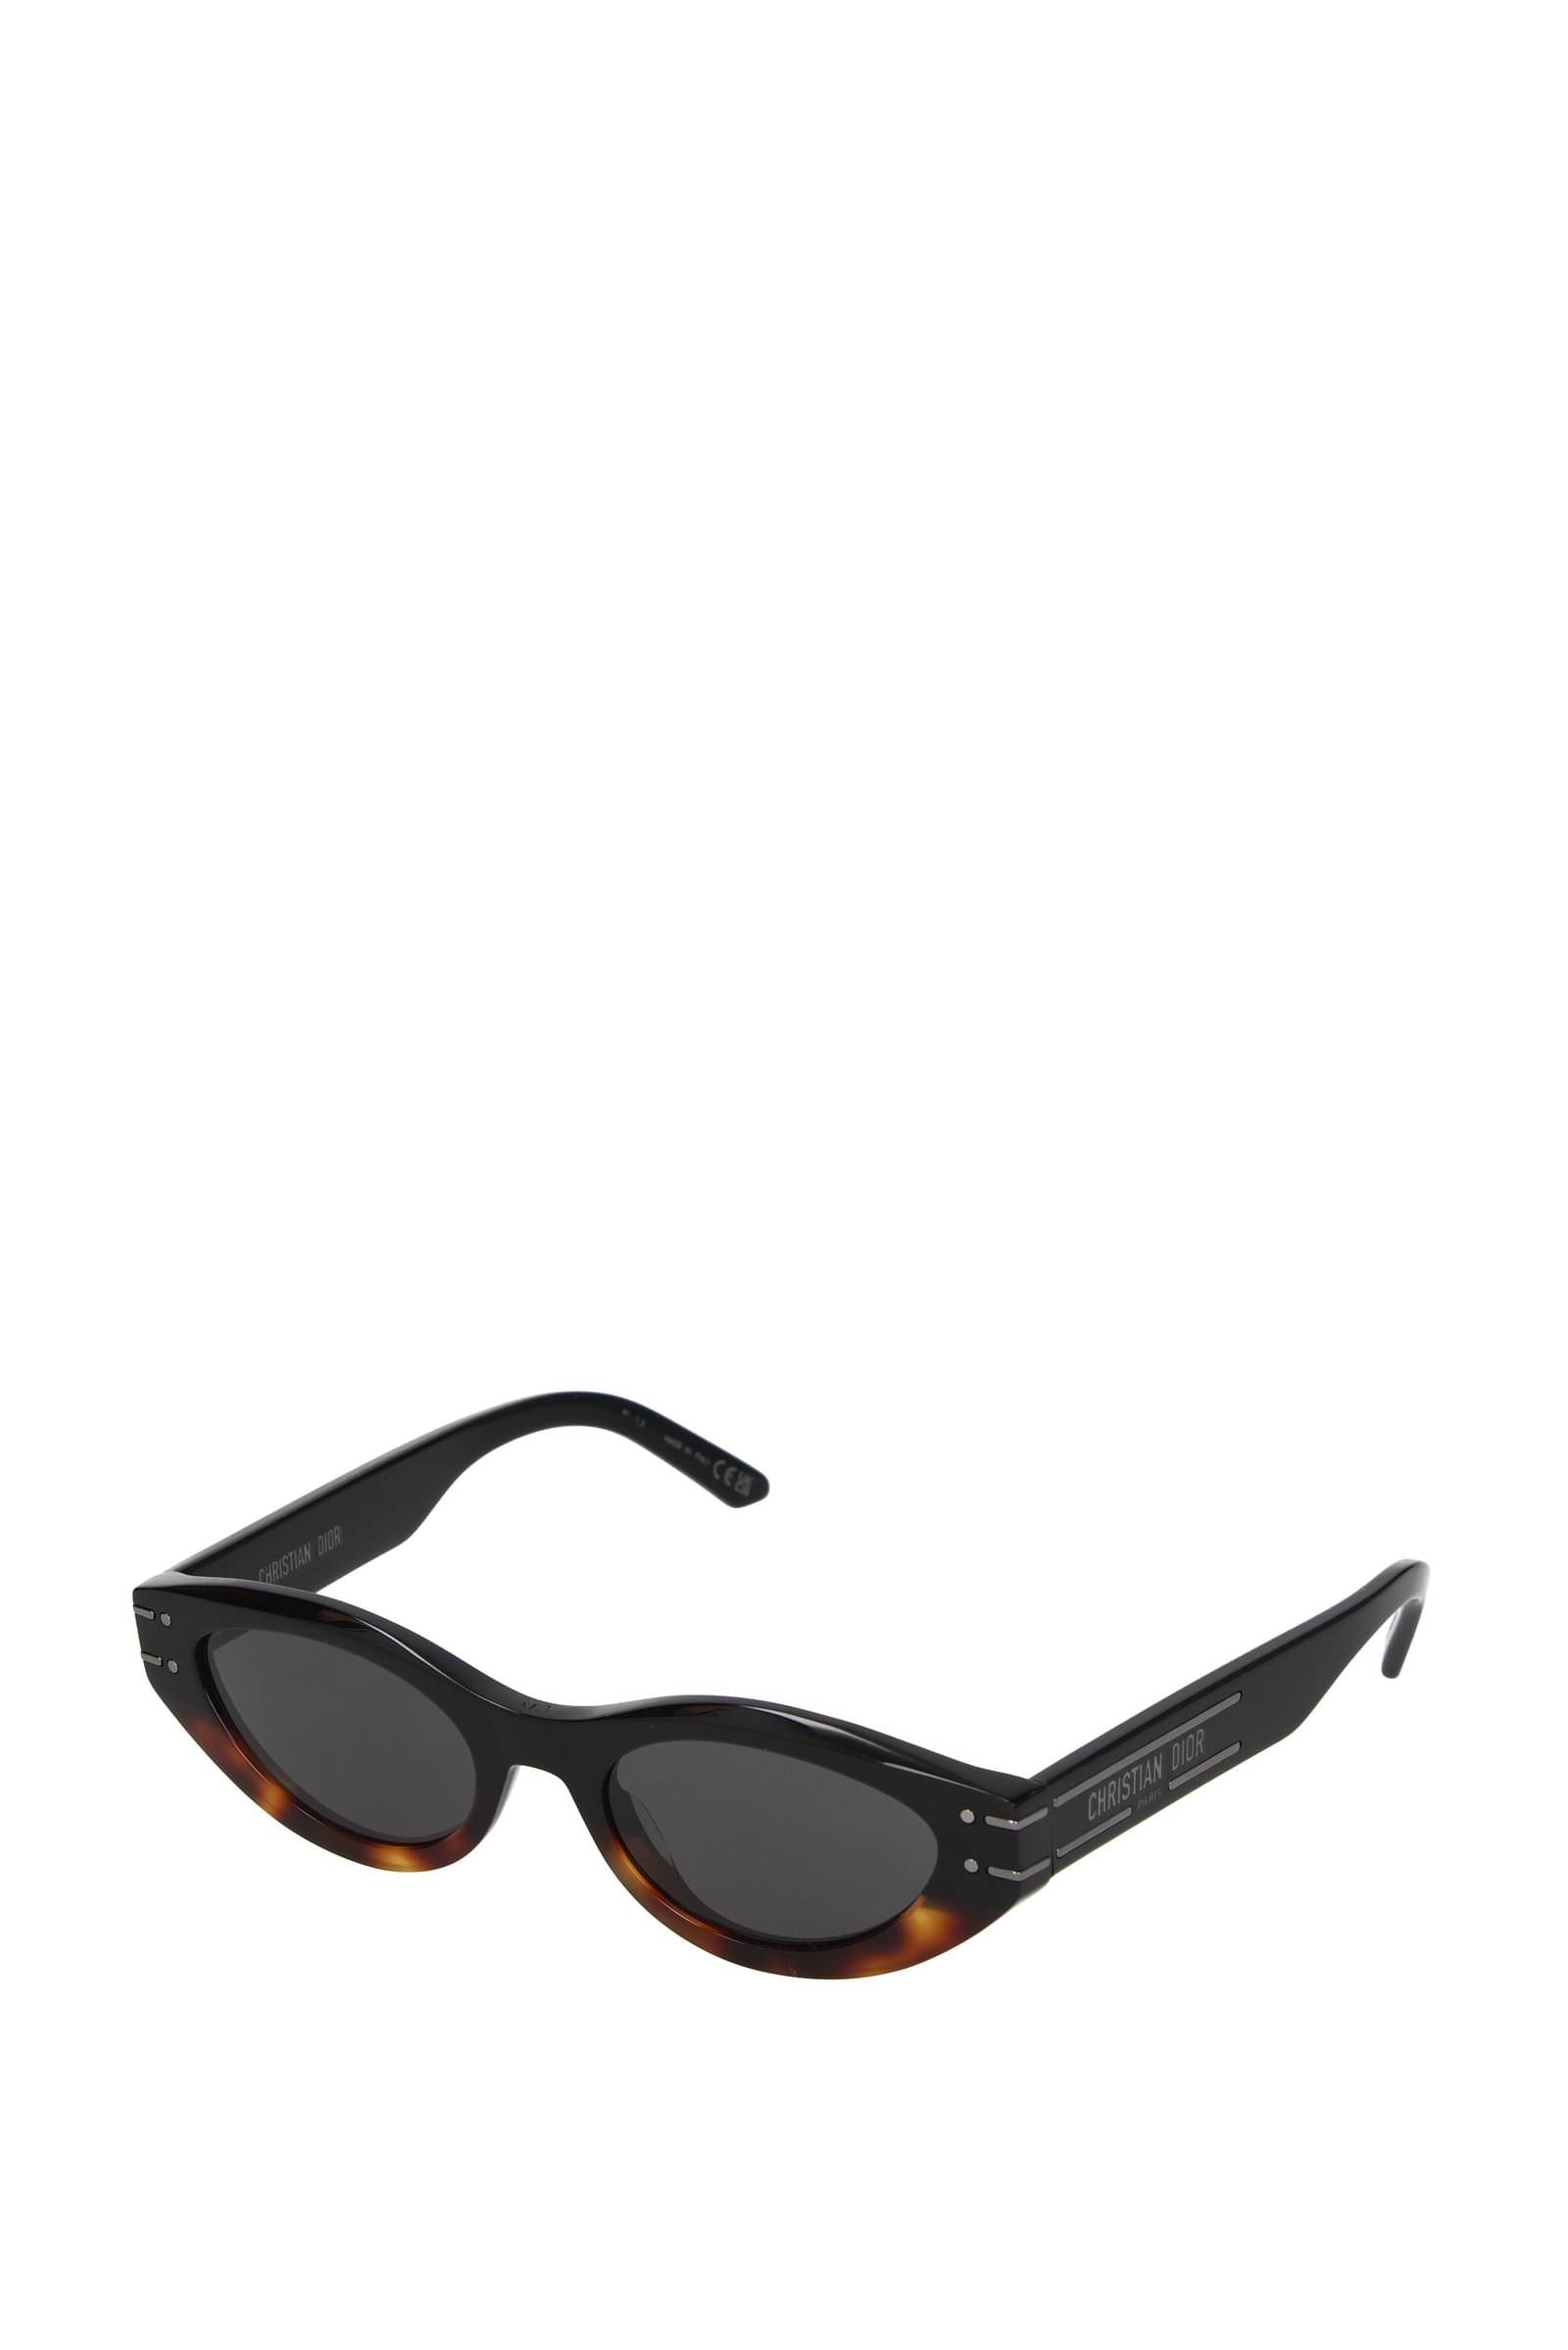 Dior - Sunglasses - DiorPacific S2U - Black - Dior Eyewear - Avvenice